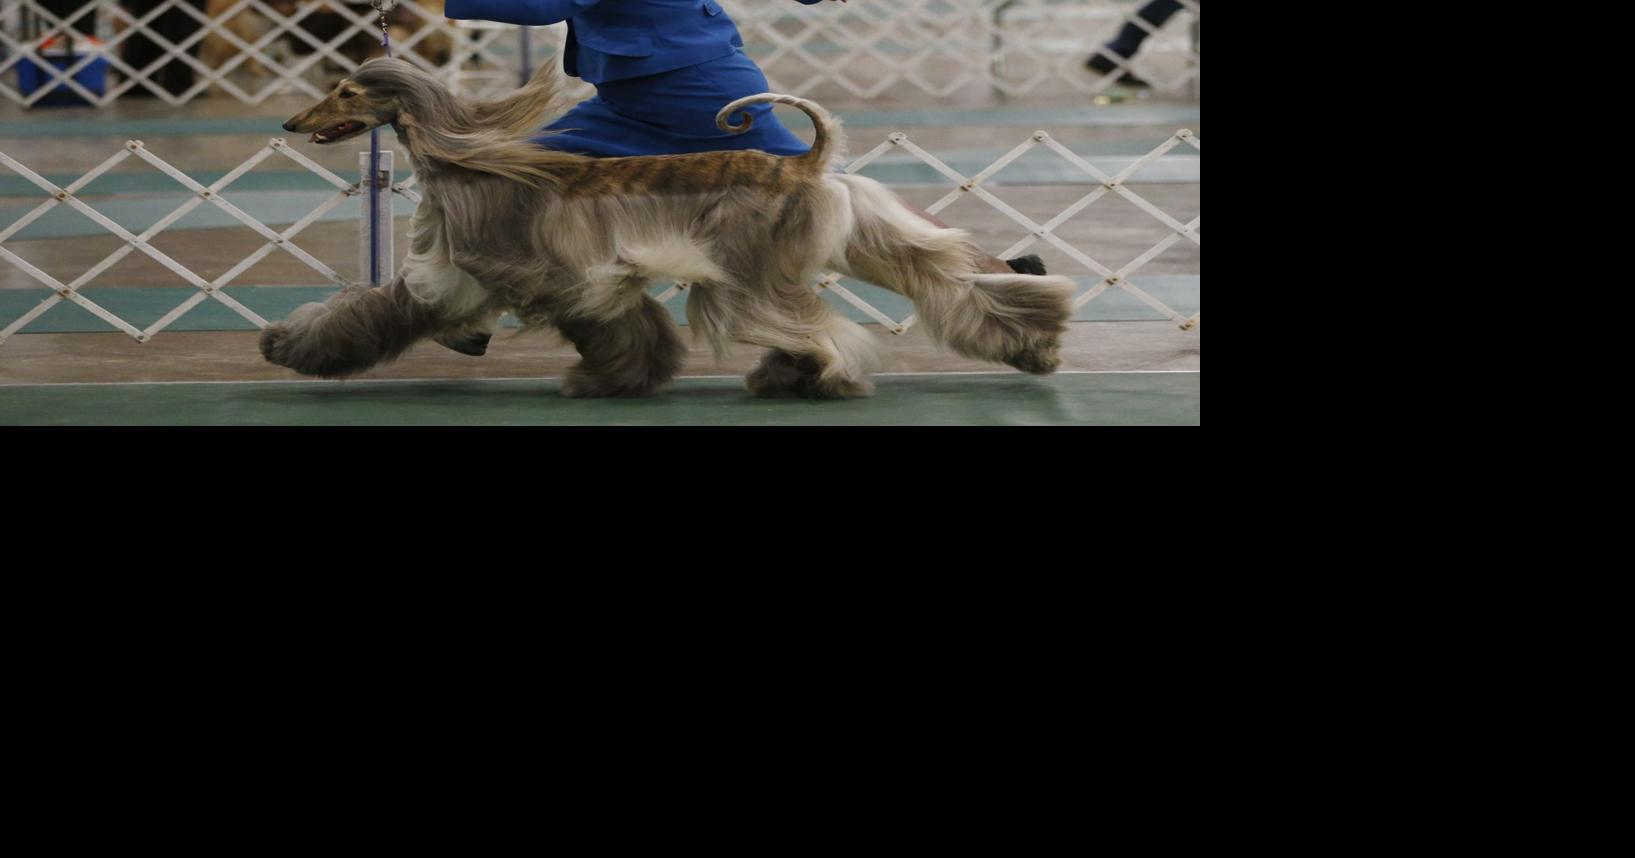 can a afghan hound live in qatar